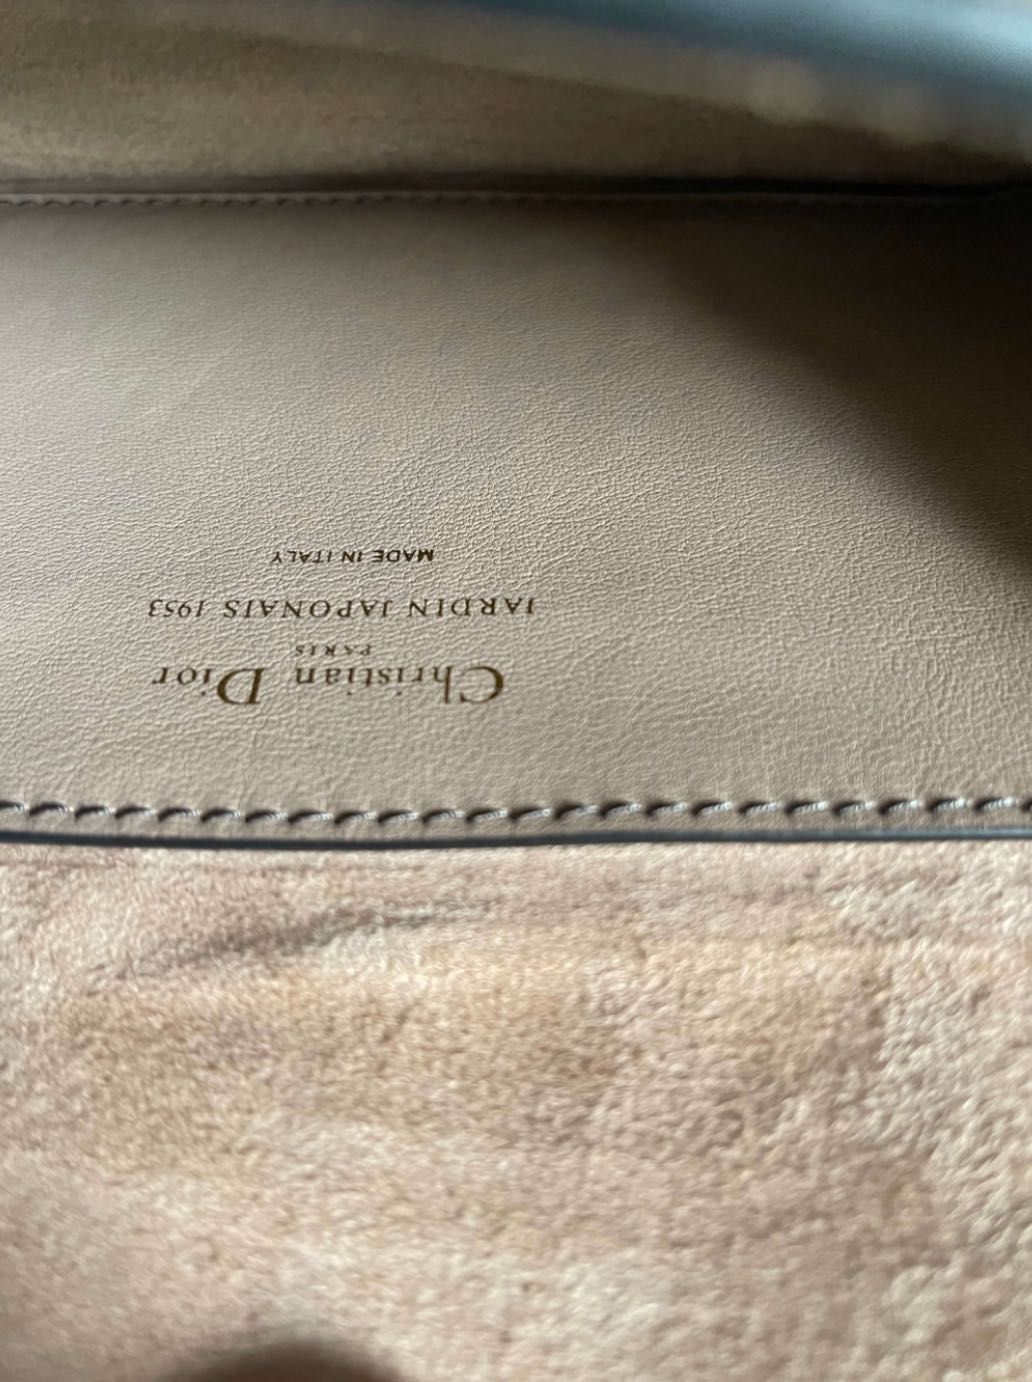 J’ADIOR Christian Dior сумка